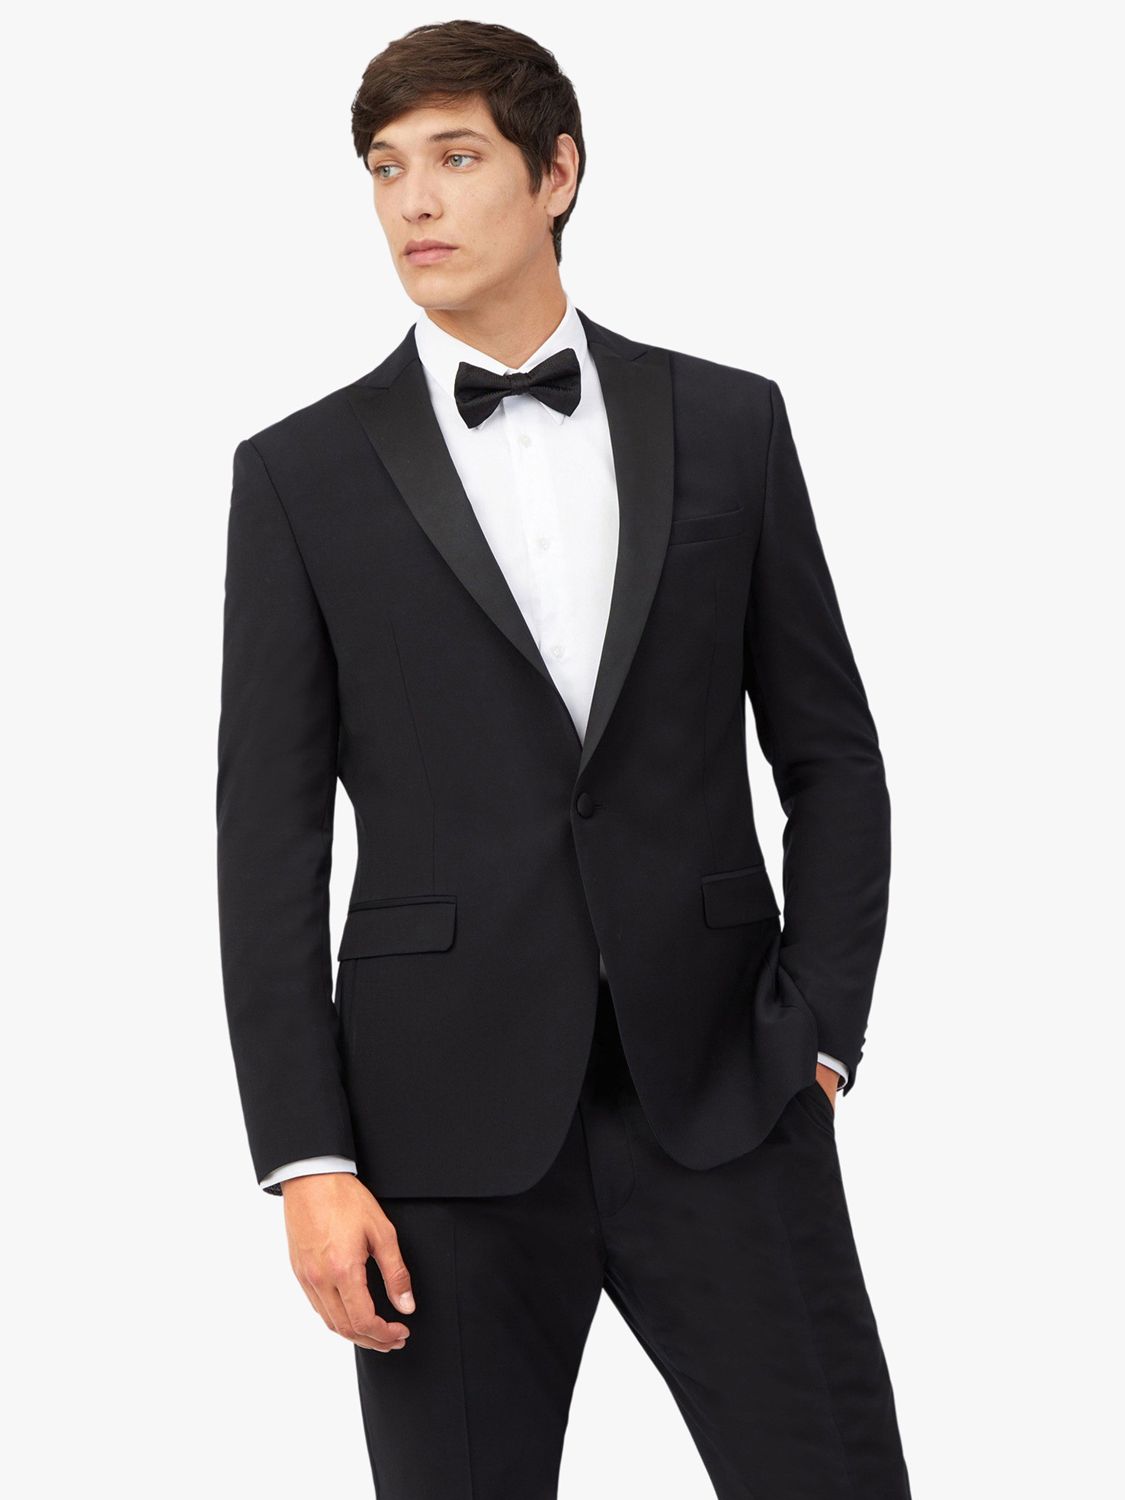 Ted Baker Wool Blend Tuxedo Suit Jacket, 290 Black, 46R